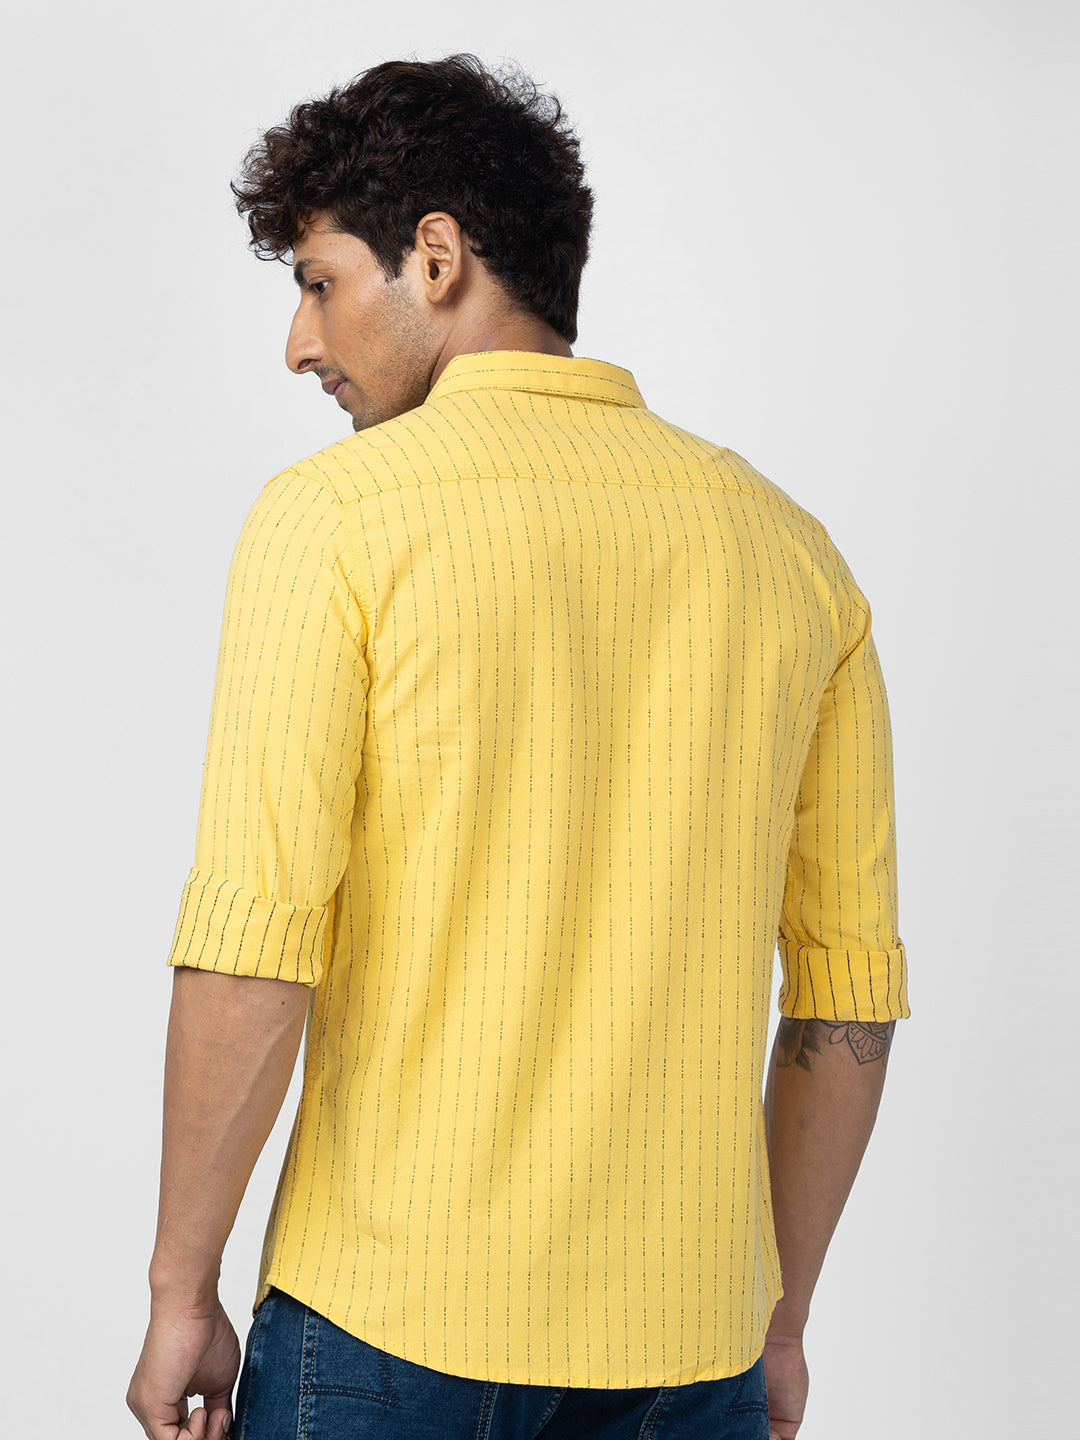 Double Pocket Denim Shirt Yellow, Jean Shirt, Men Jeans Shirt, मेन डेनिम  शर्ट - Oranges Shopi Private Limited, Surat | ID: 27106314973